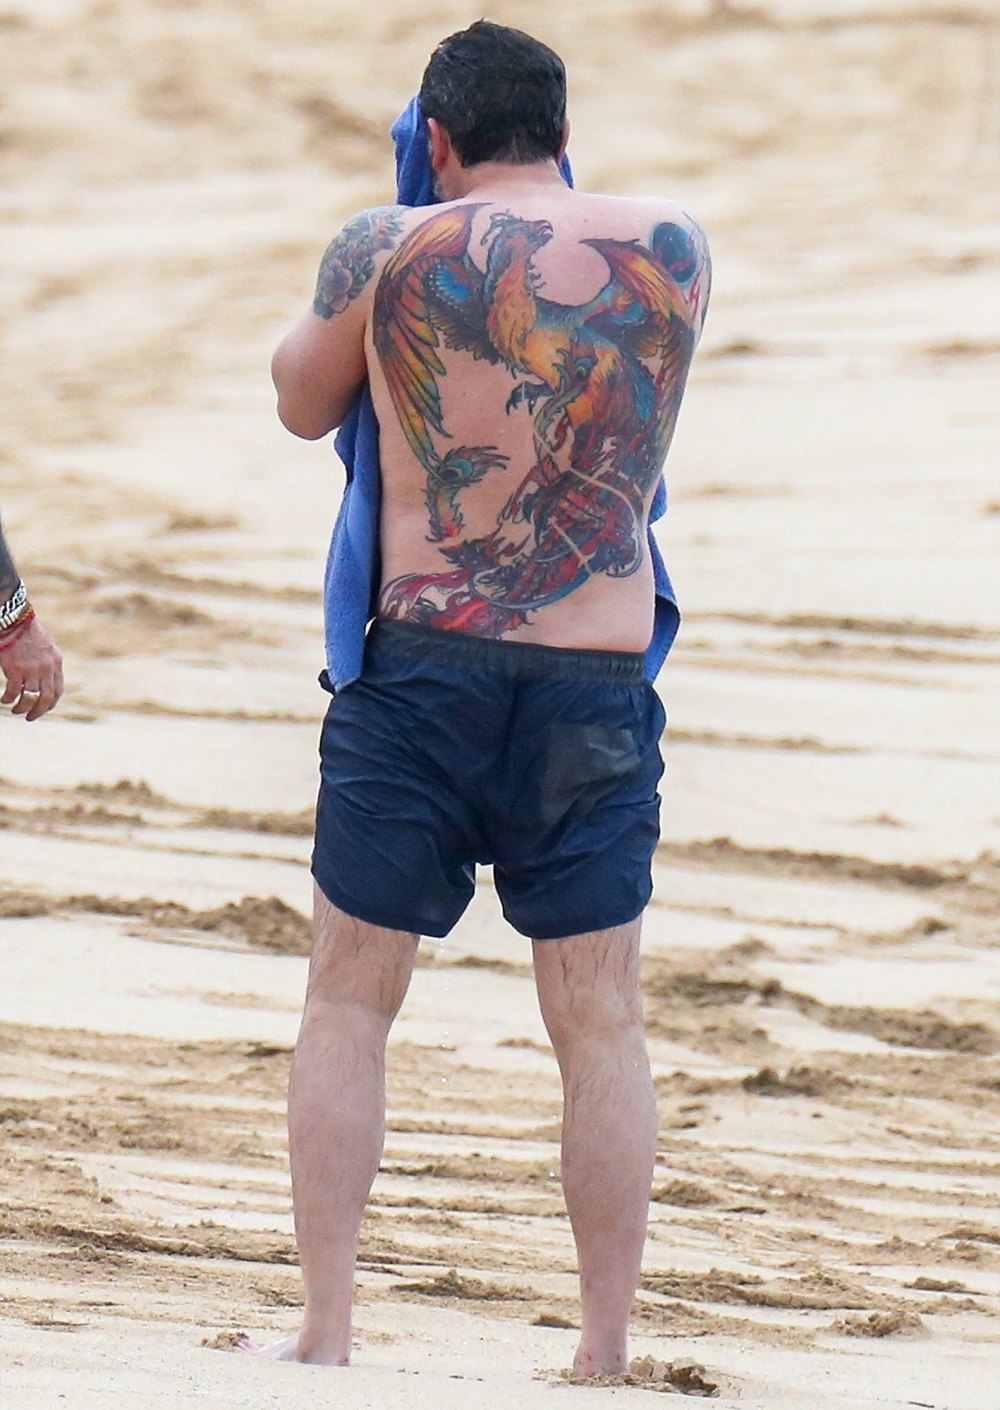 Ben Affleck Reveals Massive Back Tattoo He Said Was Fake Pics 1245